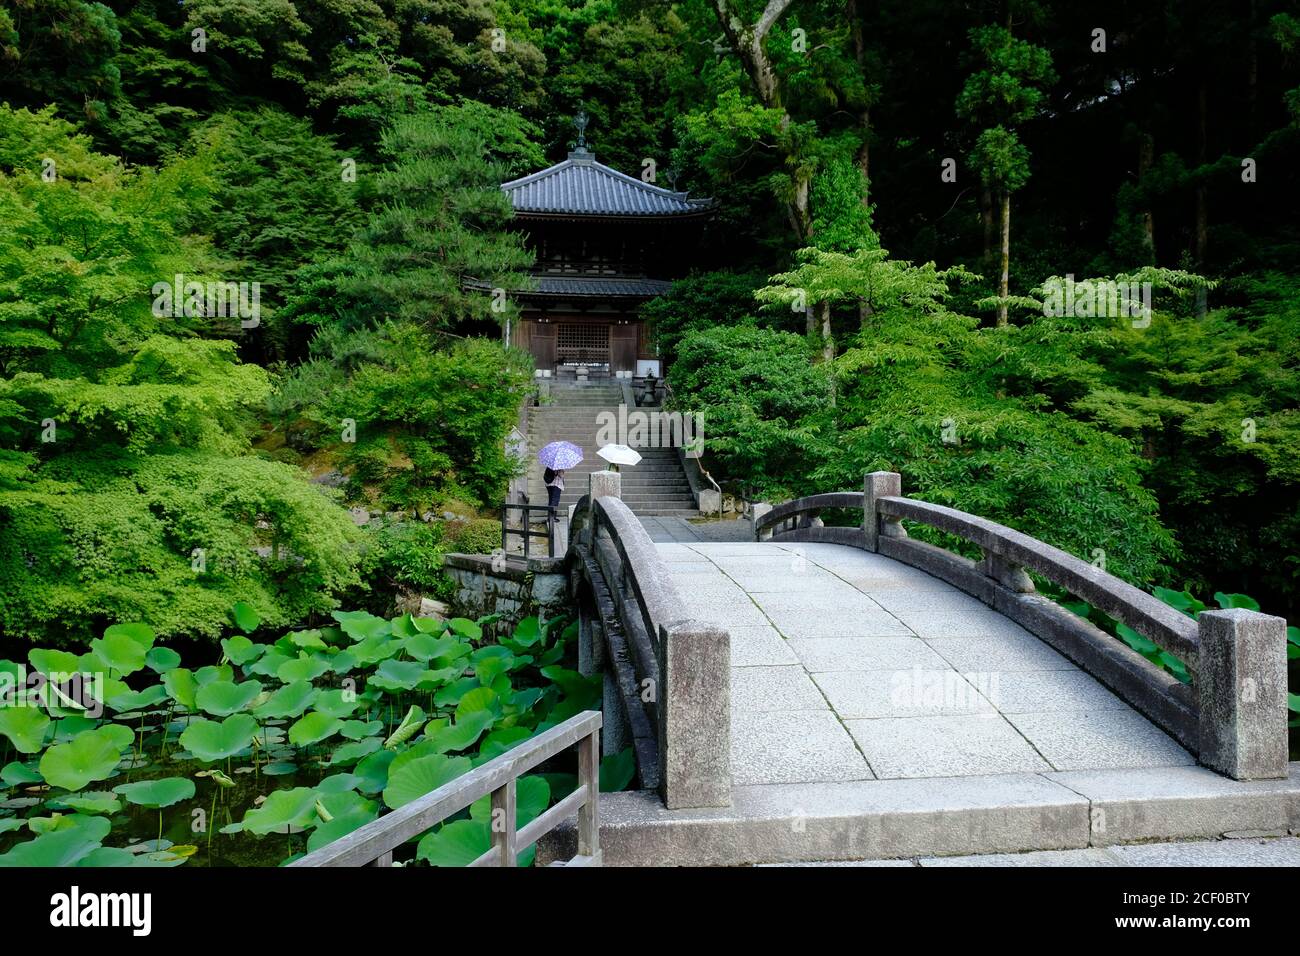 Kyoto Japan - Shoren-in Garden pond with water lilies Stock Photo